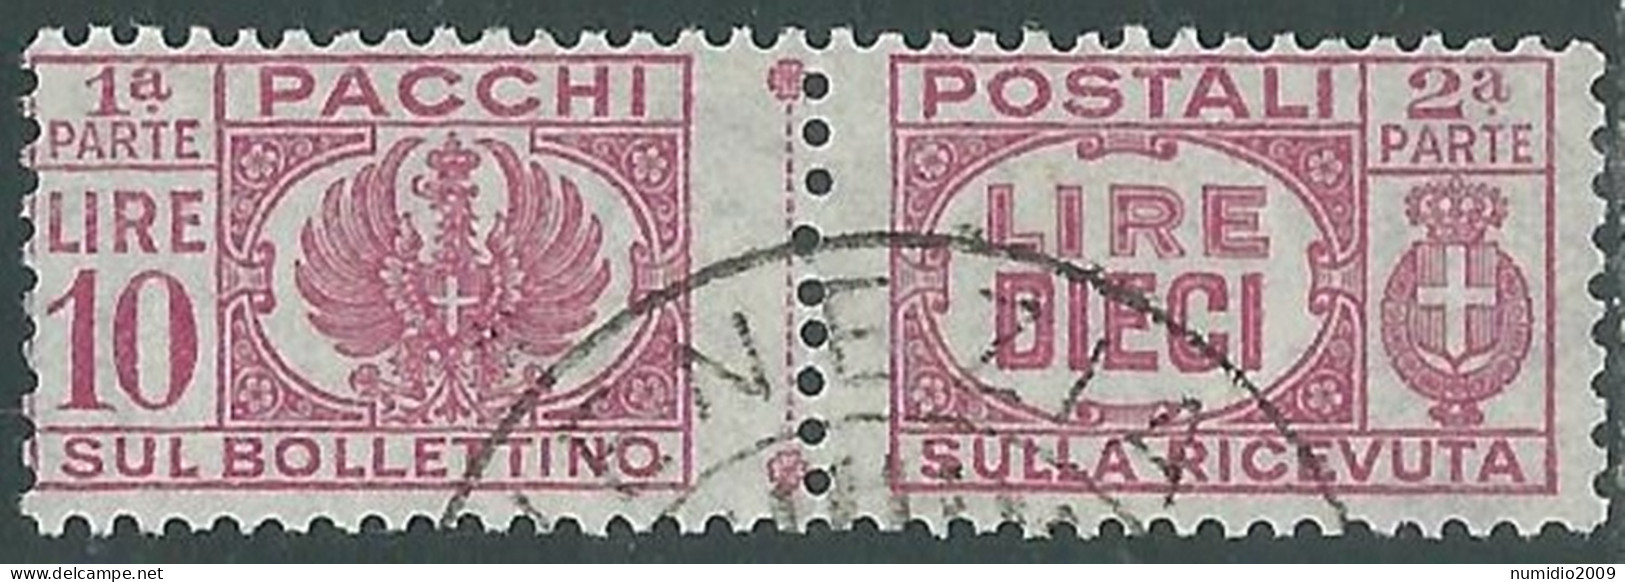 1946 LUOGOTENENZA PACCHI POSTALI USATO 10 LIRE - P31-10 - Postal Parcels